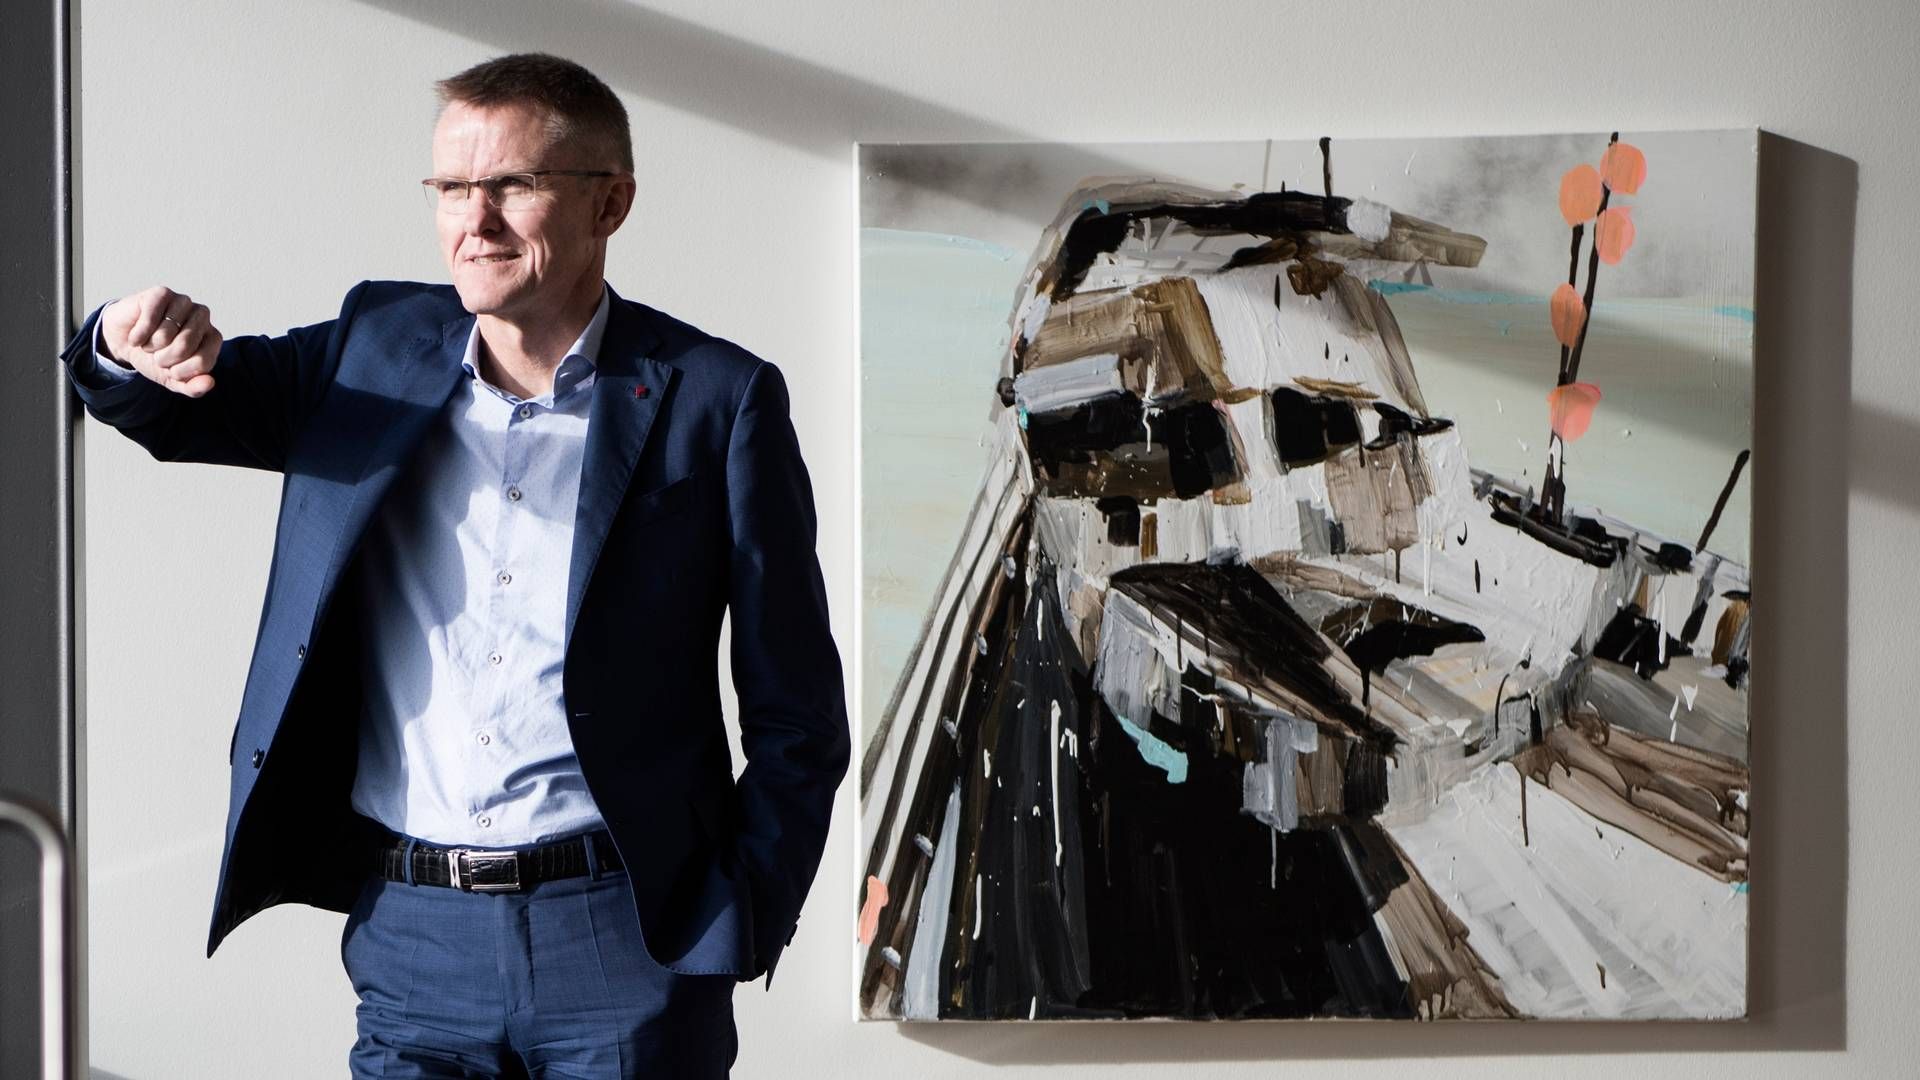 Spar Nord med adm. direktør Lasse Nyby i front har sat kurs mod nyt rekordresultat. | Foto: Gregers Tycho/ERH